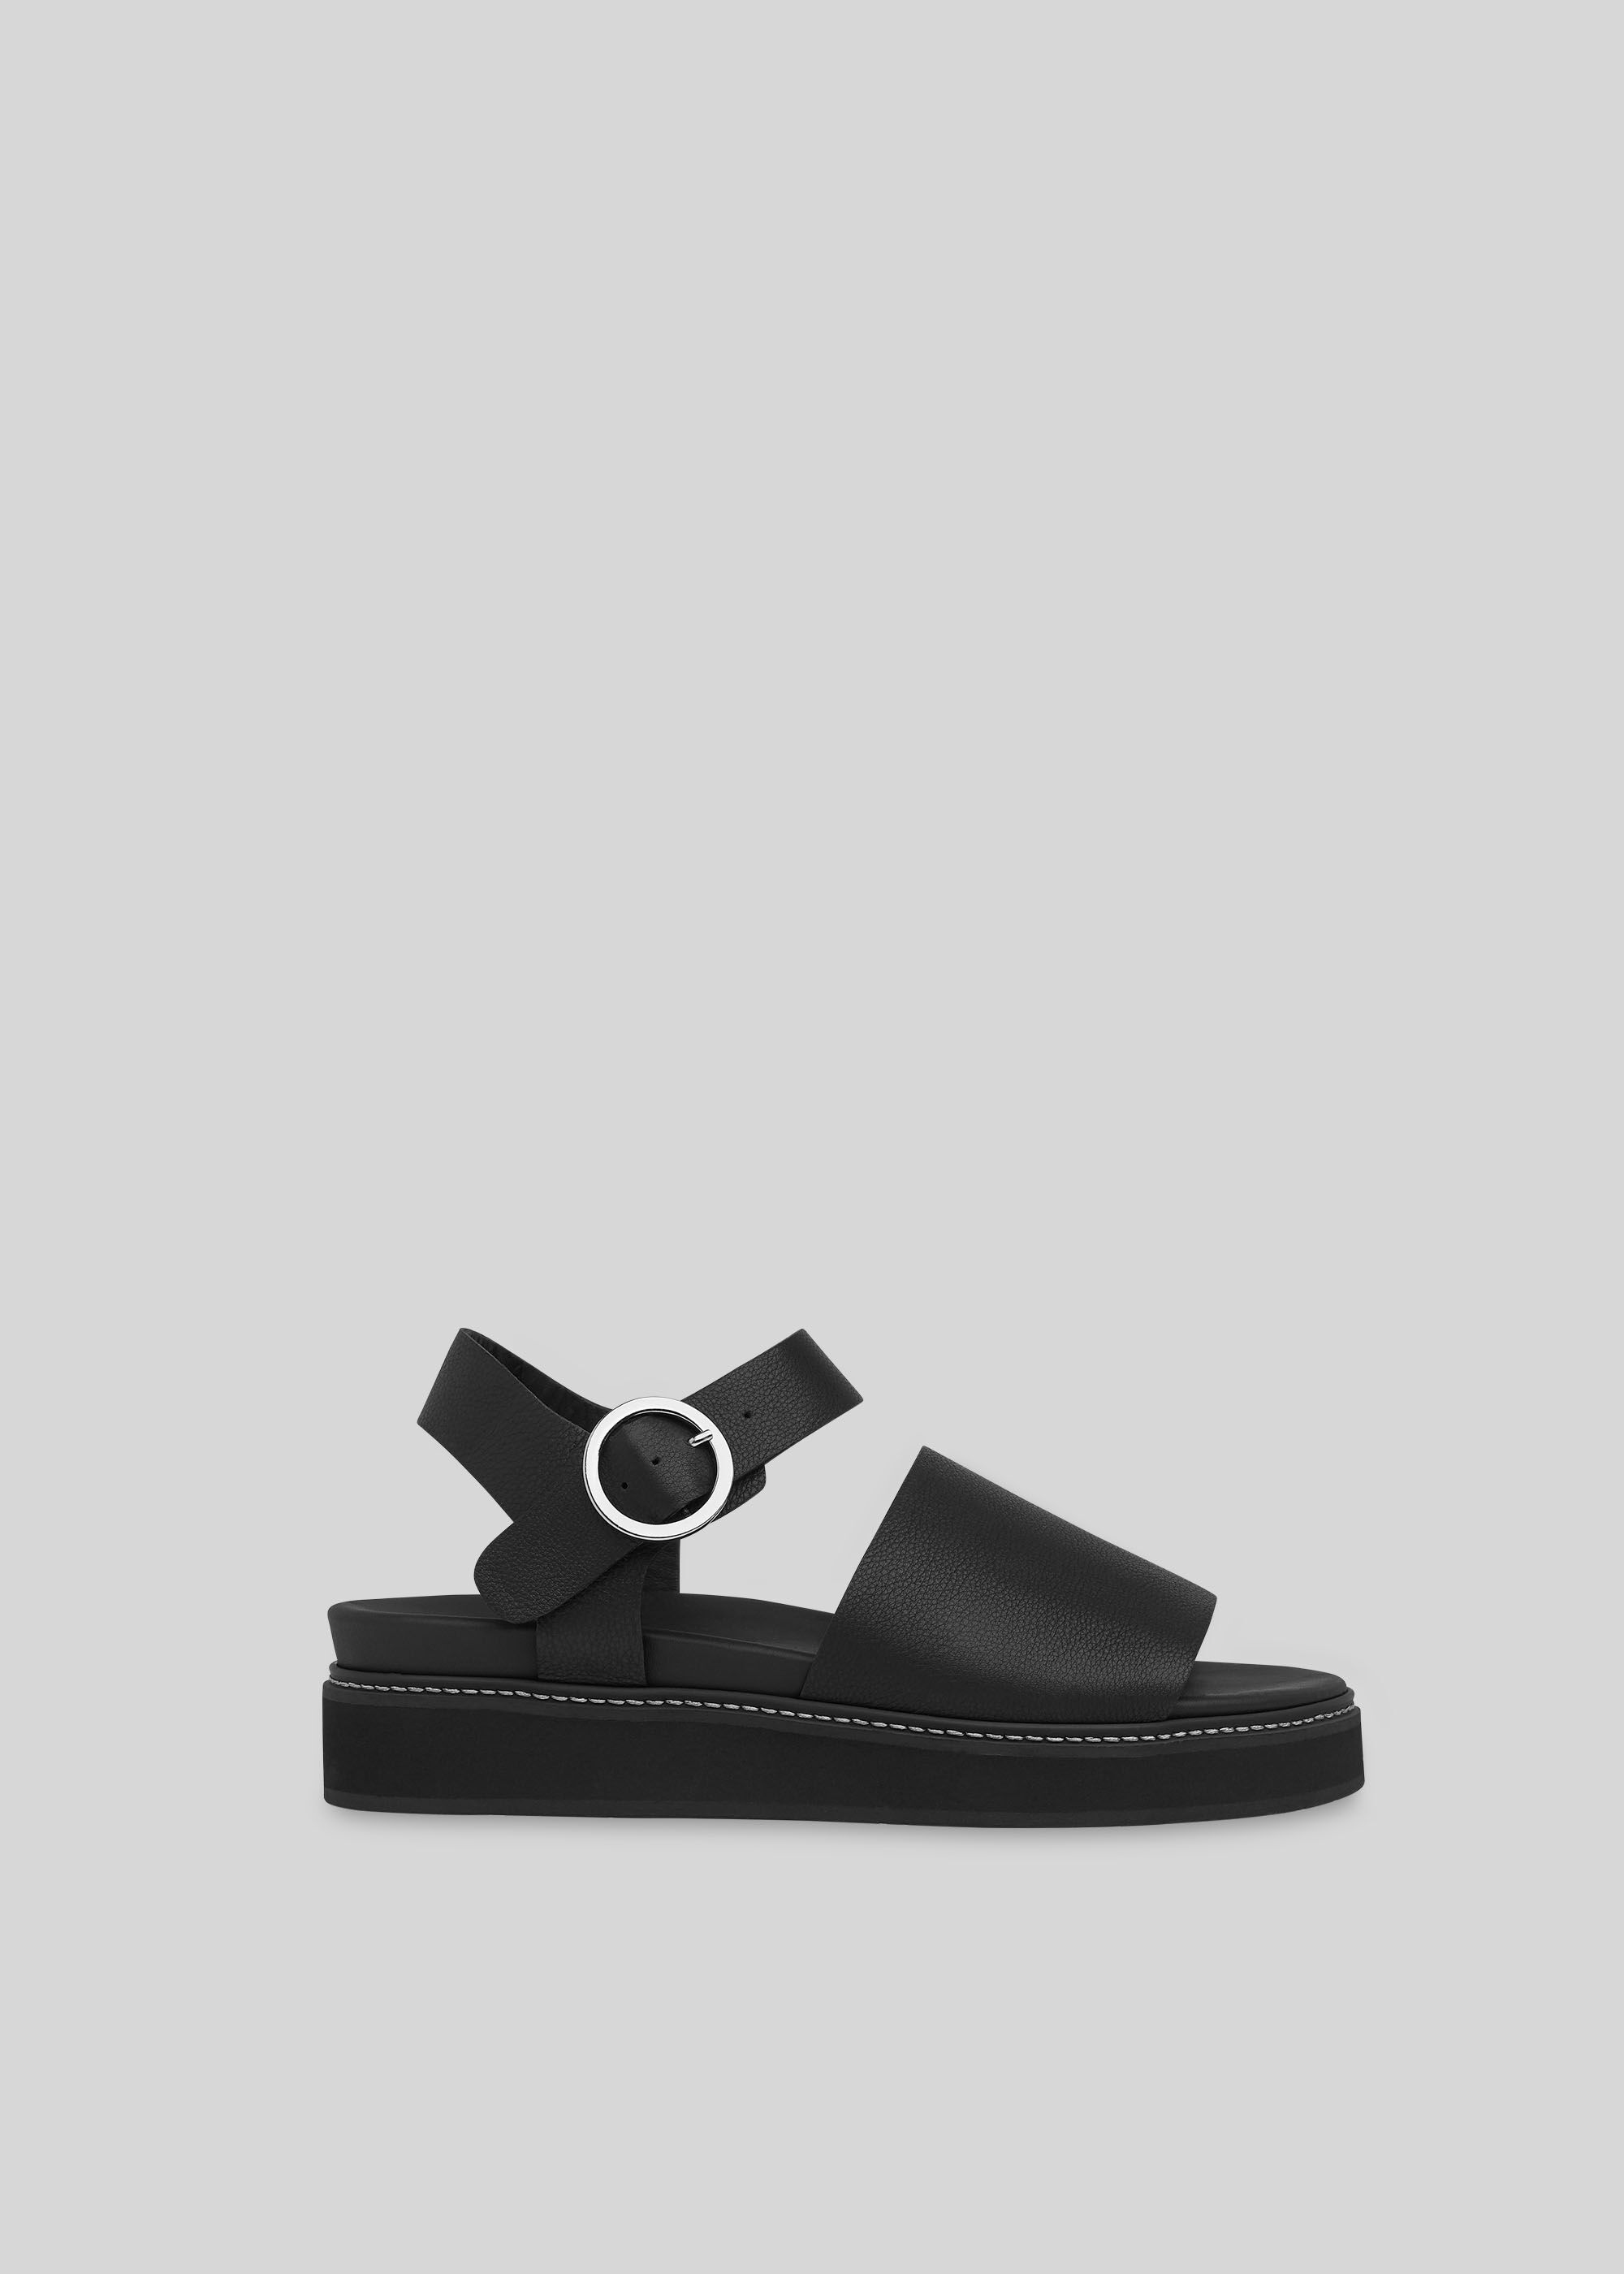 strive sandals 2019